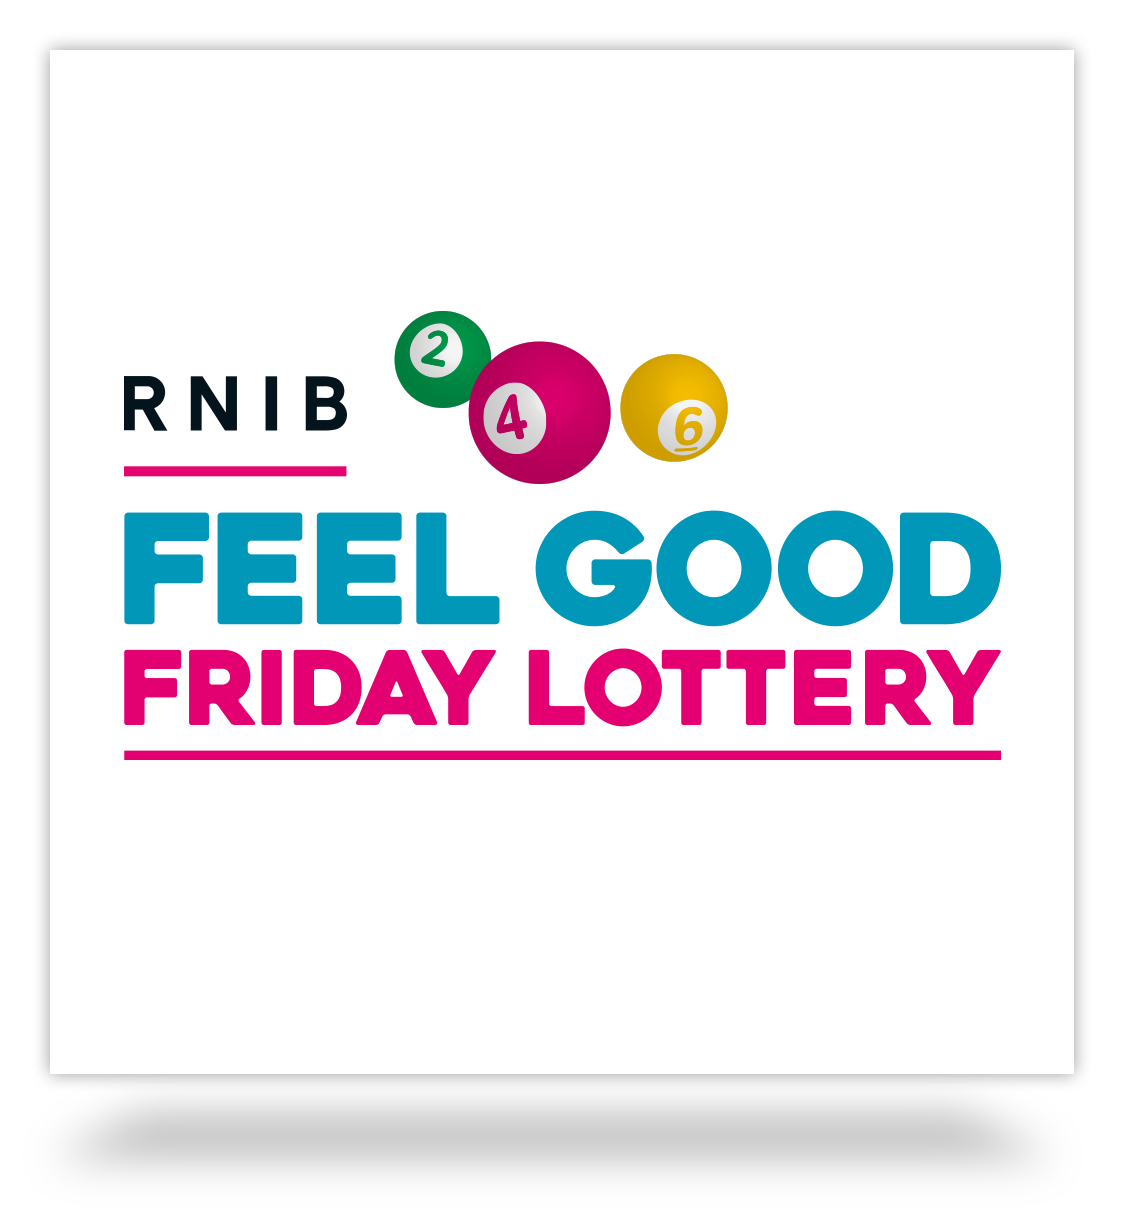 RNIB - Feel Good Friday Lottery | Taran Stafford ...